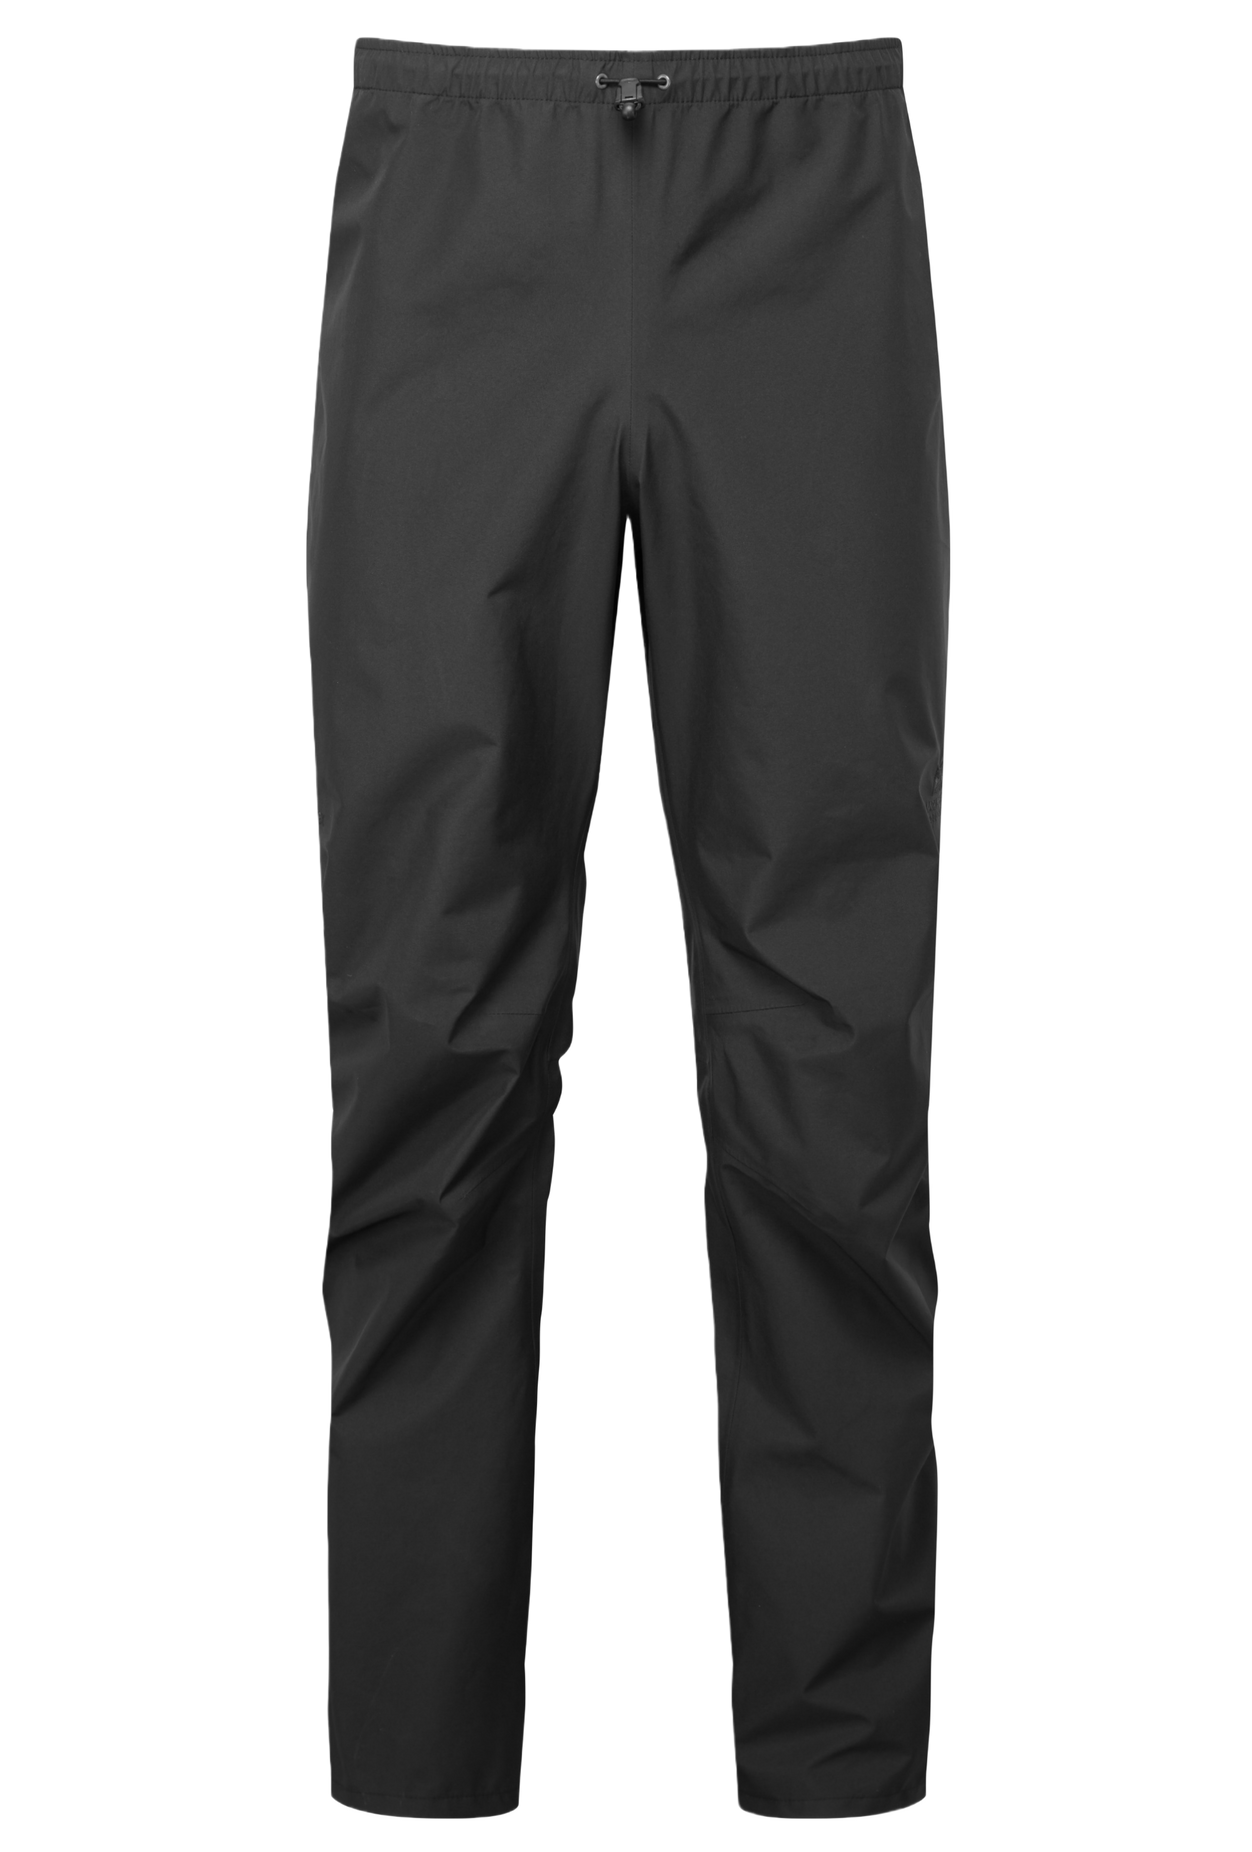 fit space Golf Climastorm Permanent Rain Pants Waterproof 20K Lightweight  Performance Sporty Trousers Black Pro Medium